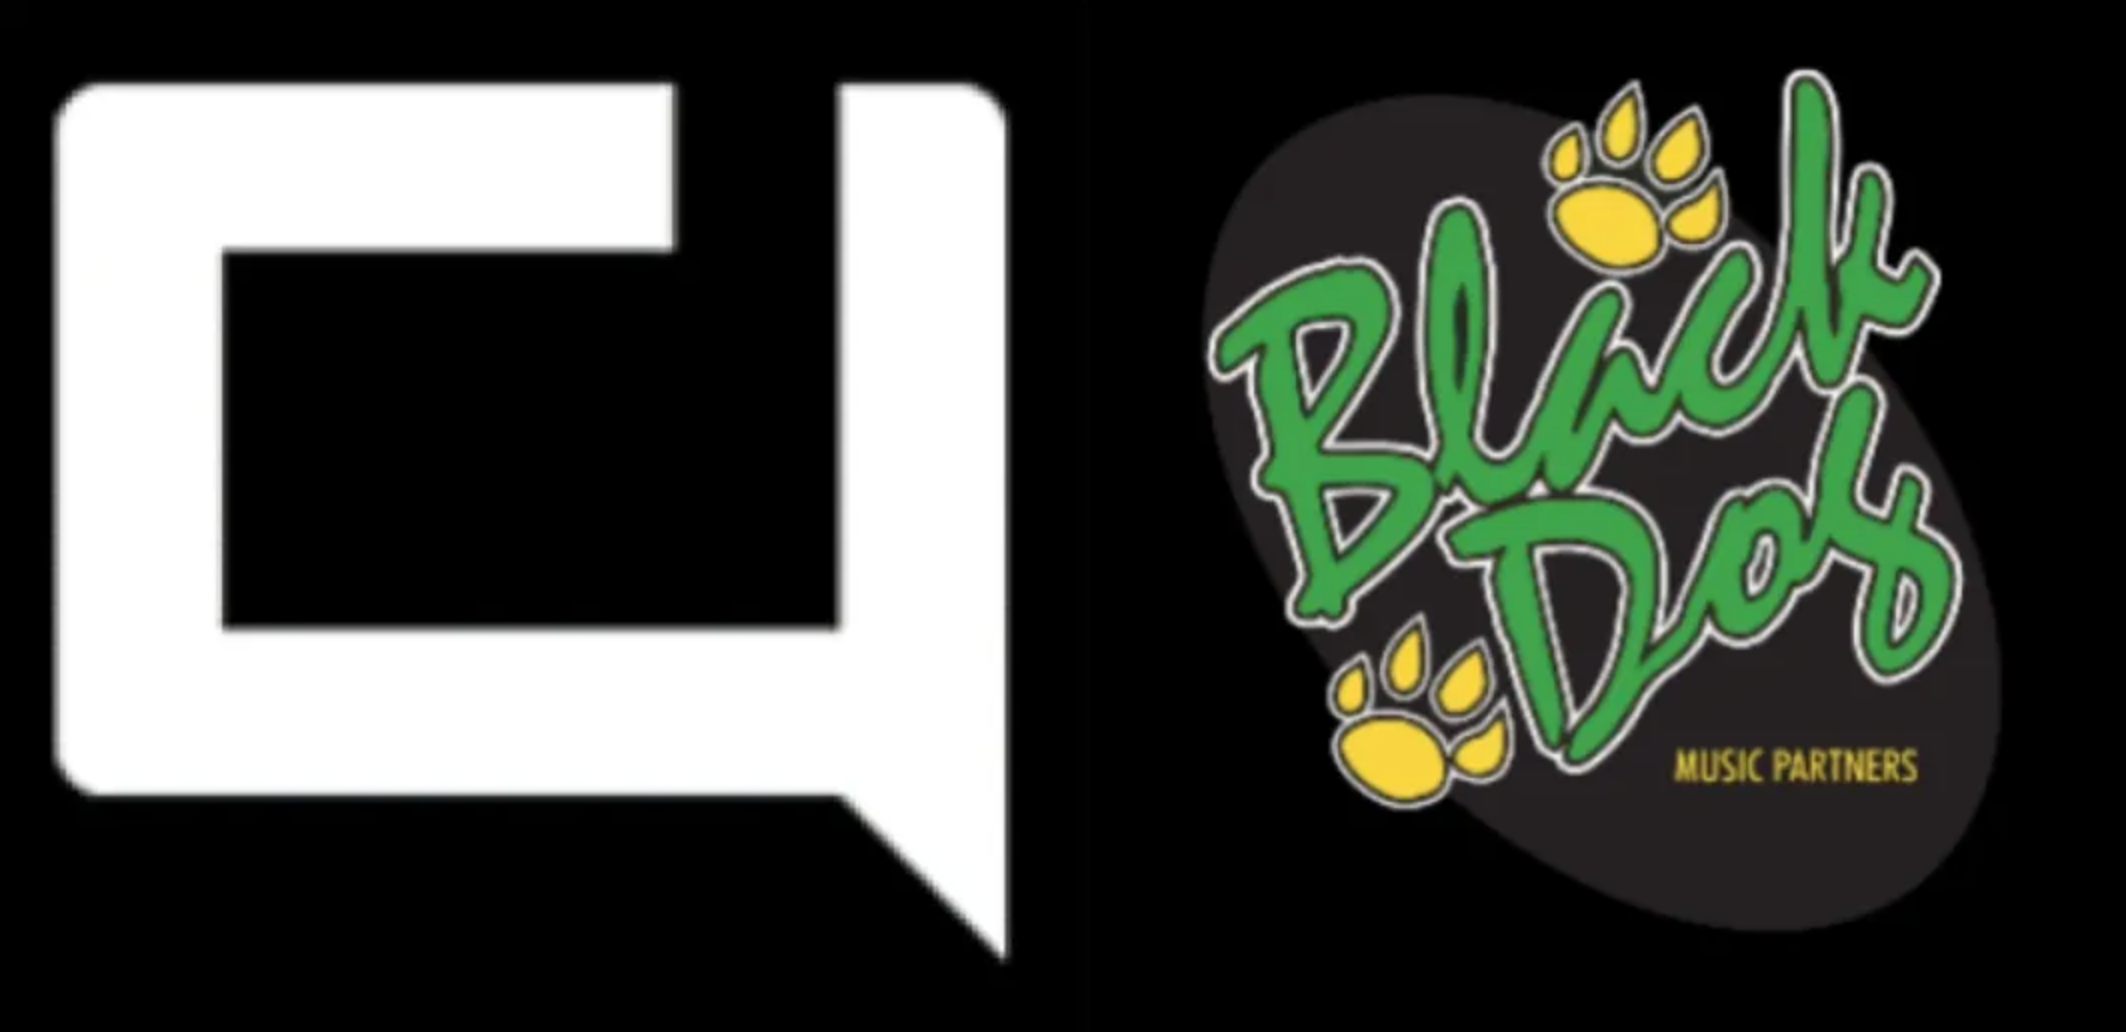 Subba & Black Dog Music Partners Announce Music Marketing Partnership